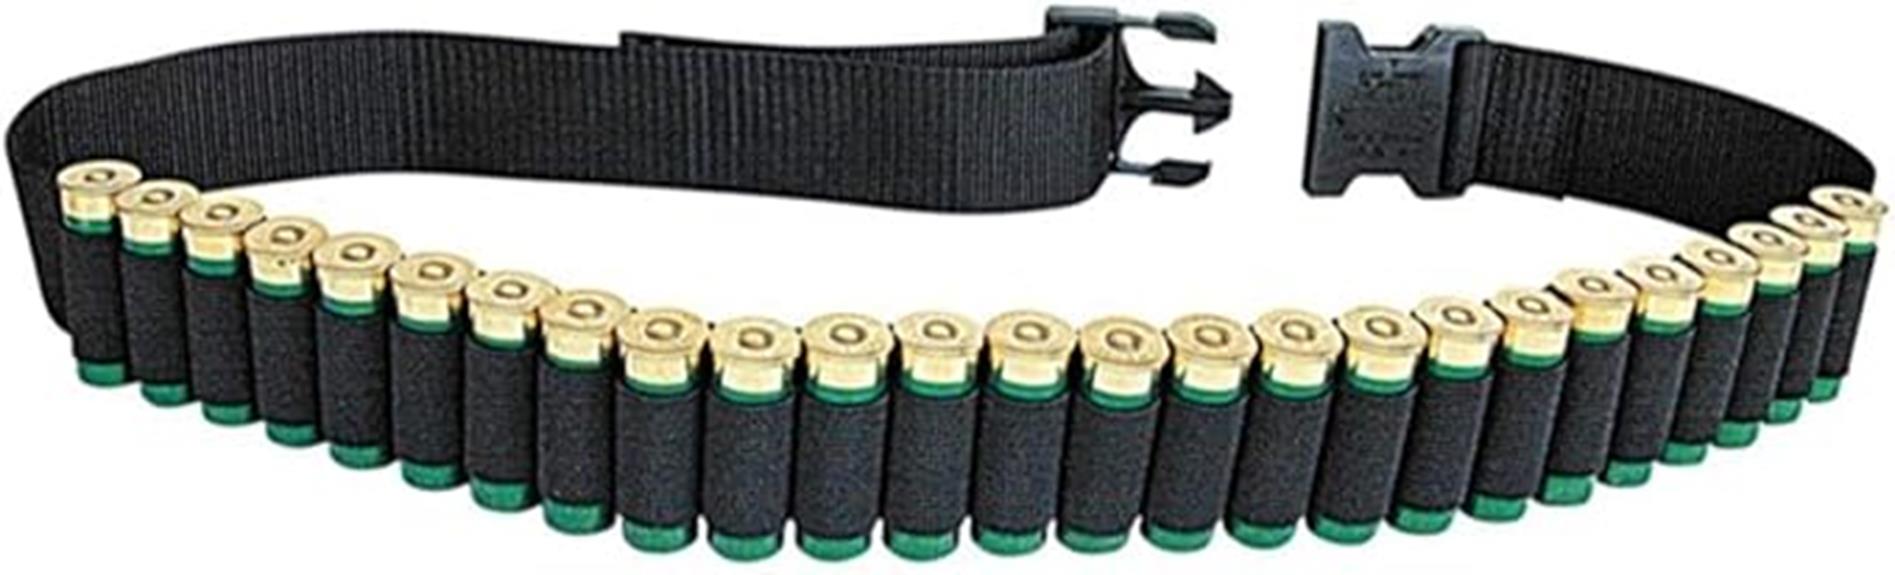 shotgun shell belt accessory